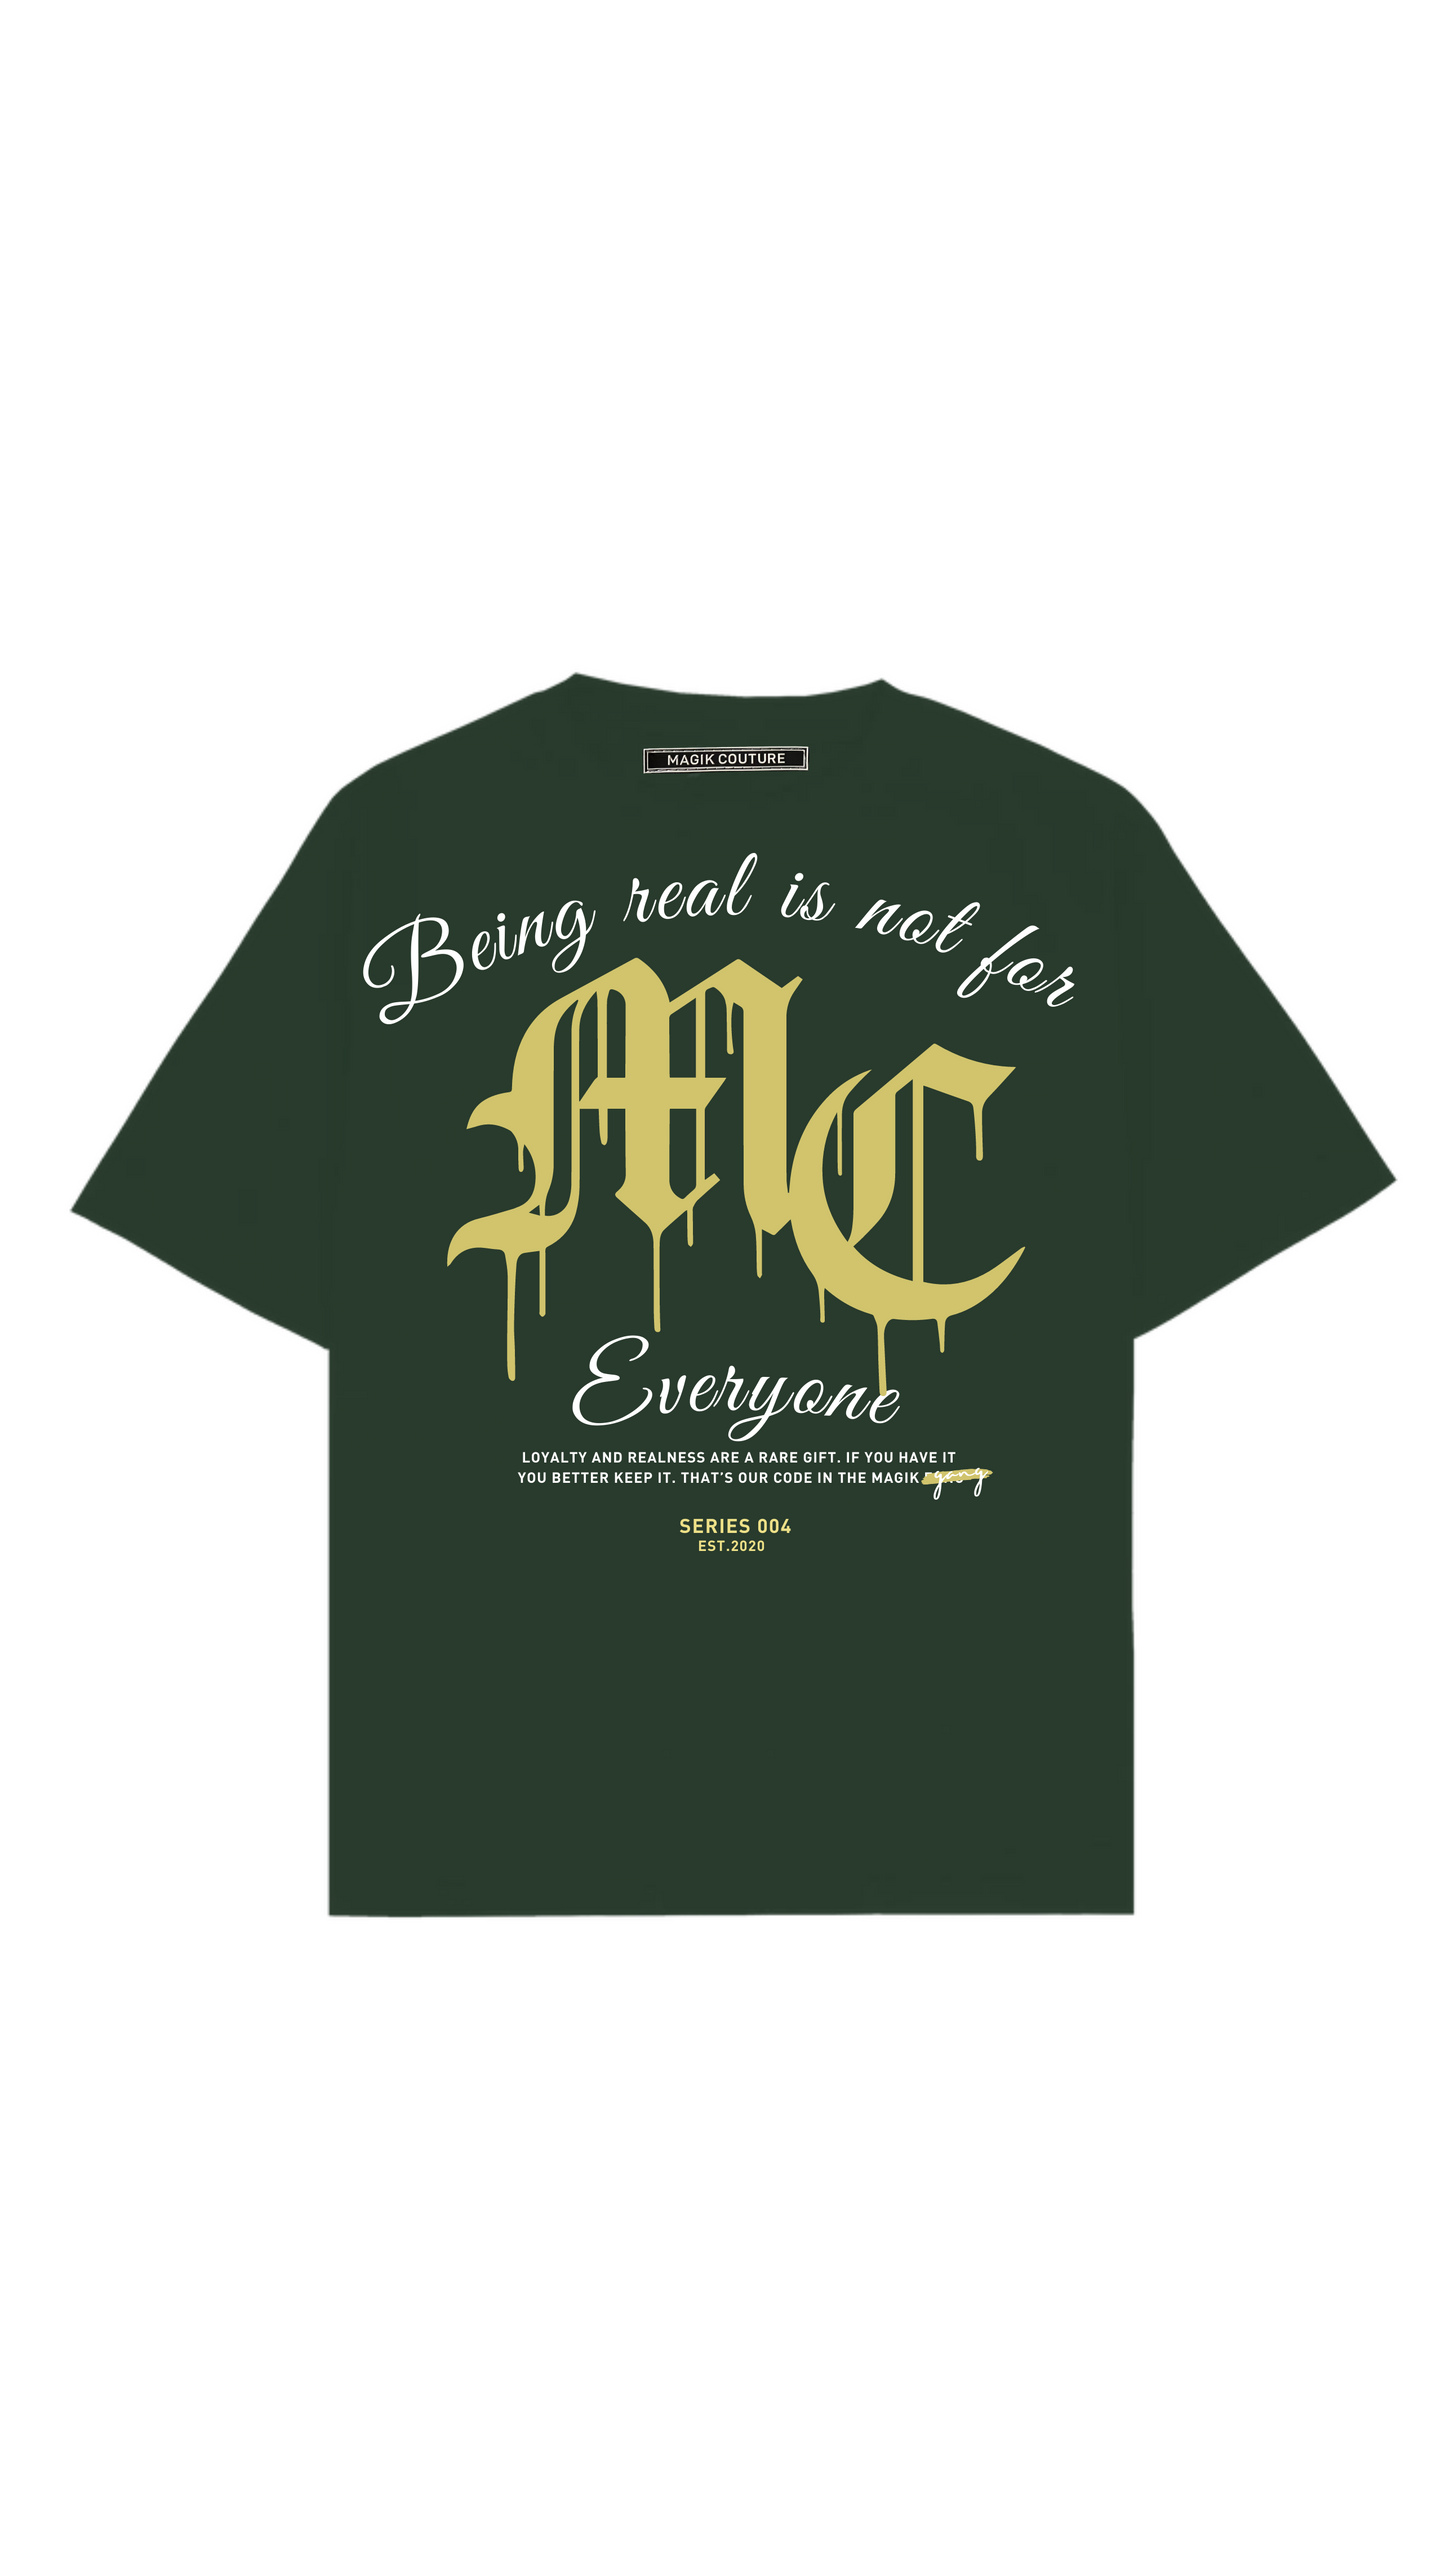 Camiseta Magik Gang Oversize Verde